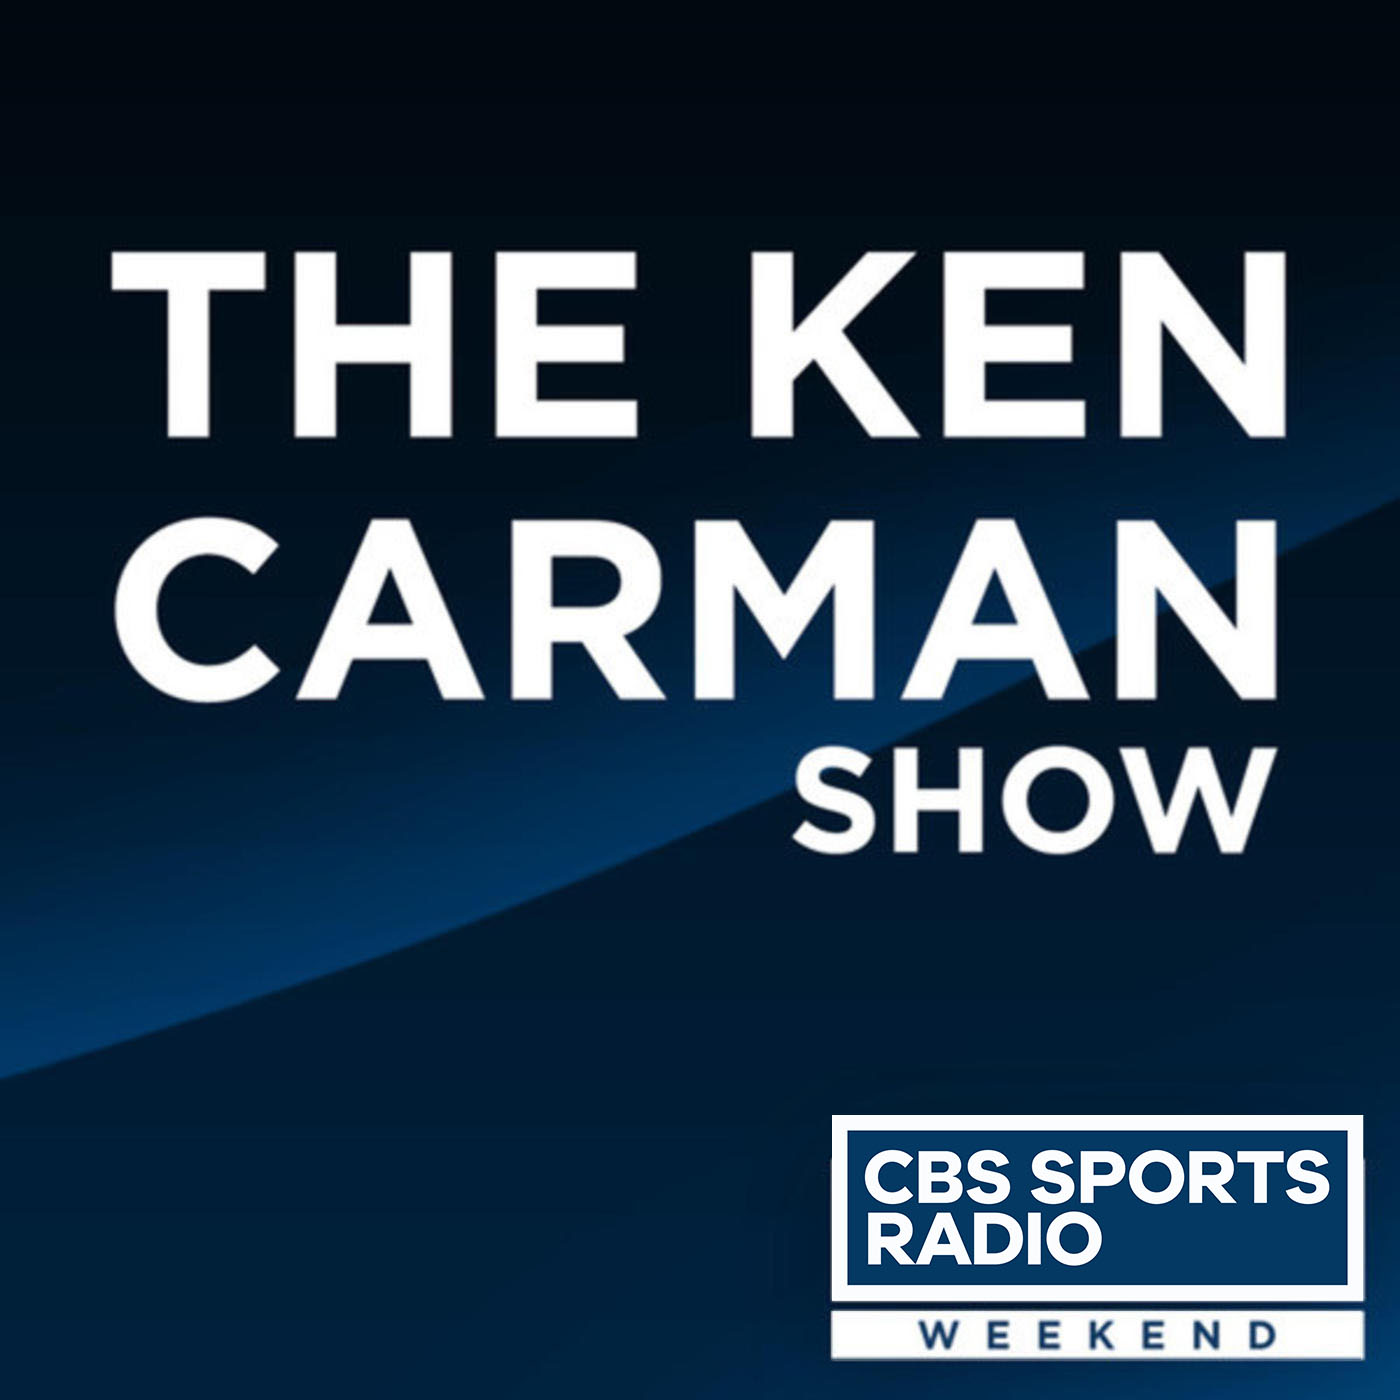 The Ken Carman Show 04-27-19 Hour 1